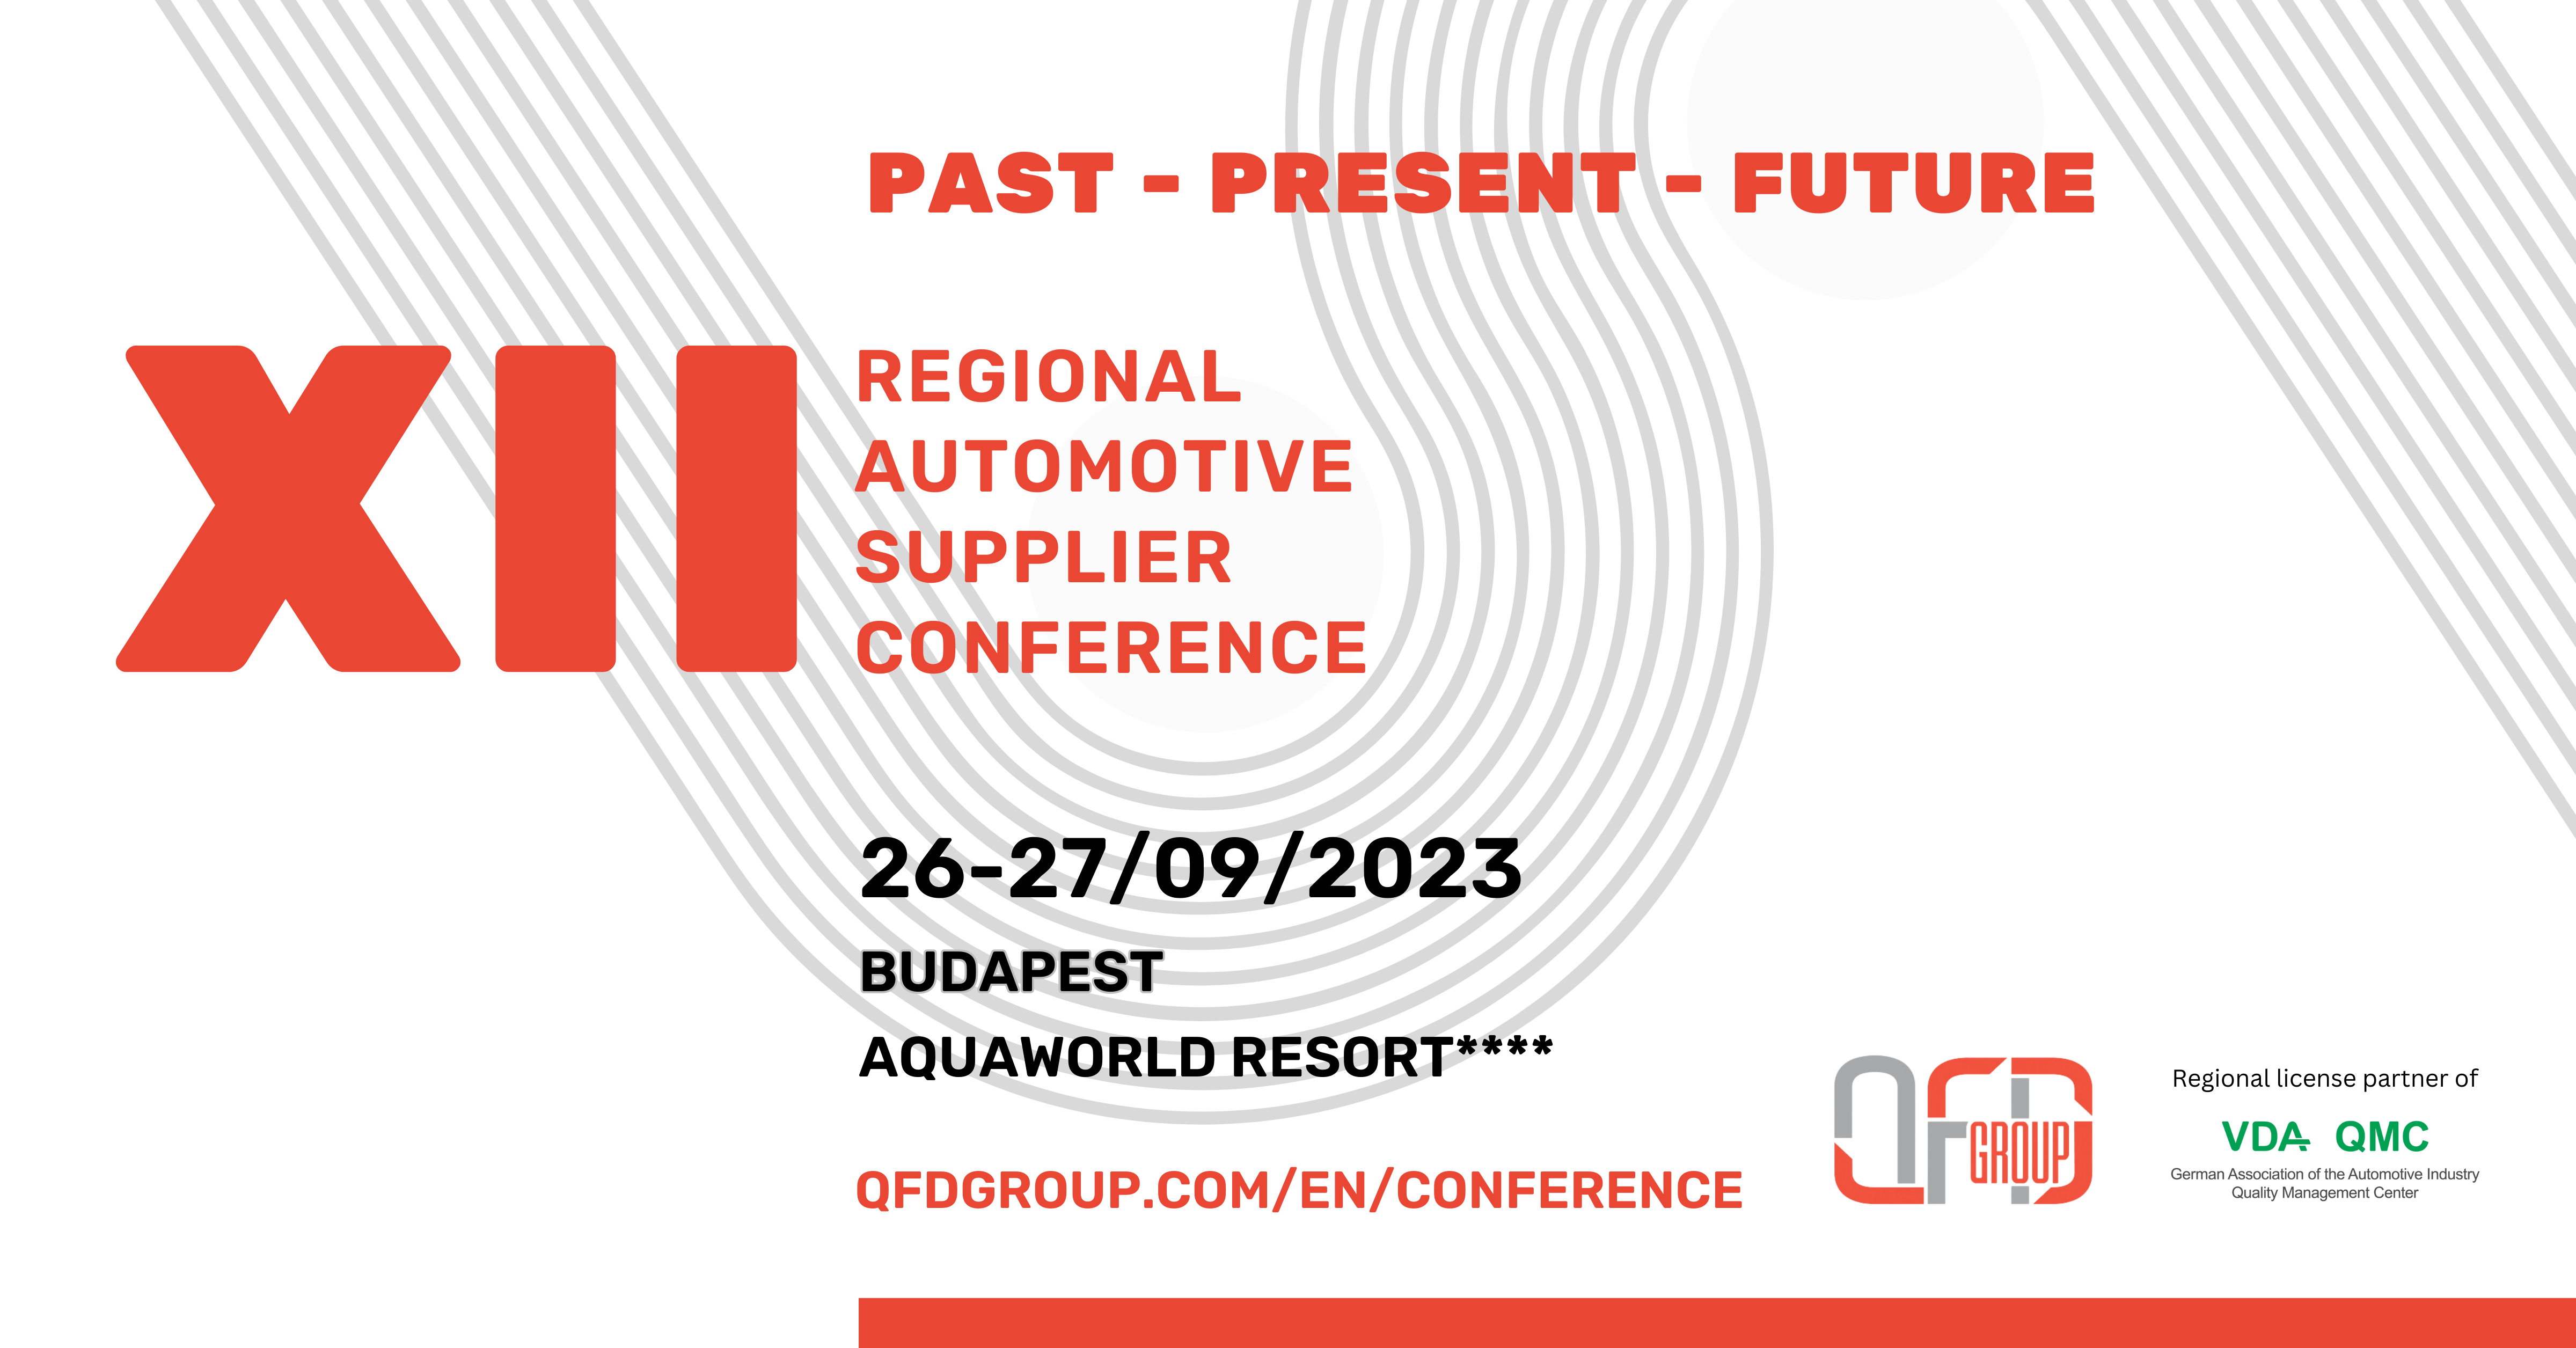 regional-automotive-supplier-conference-banner